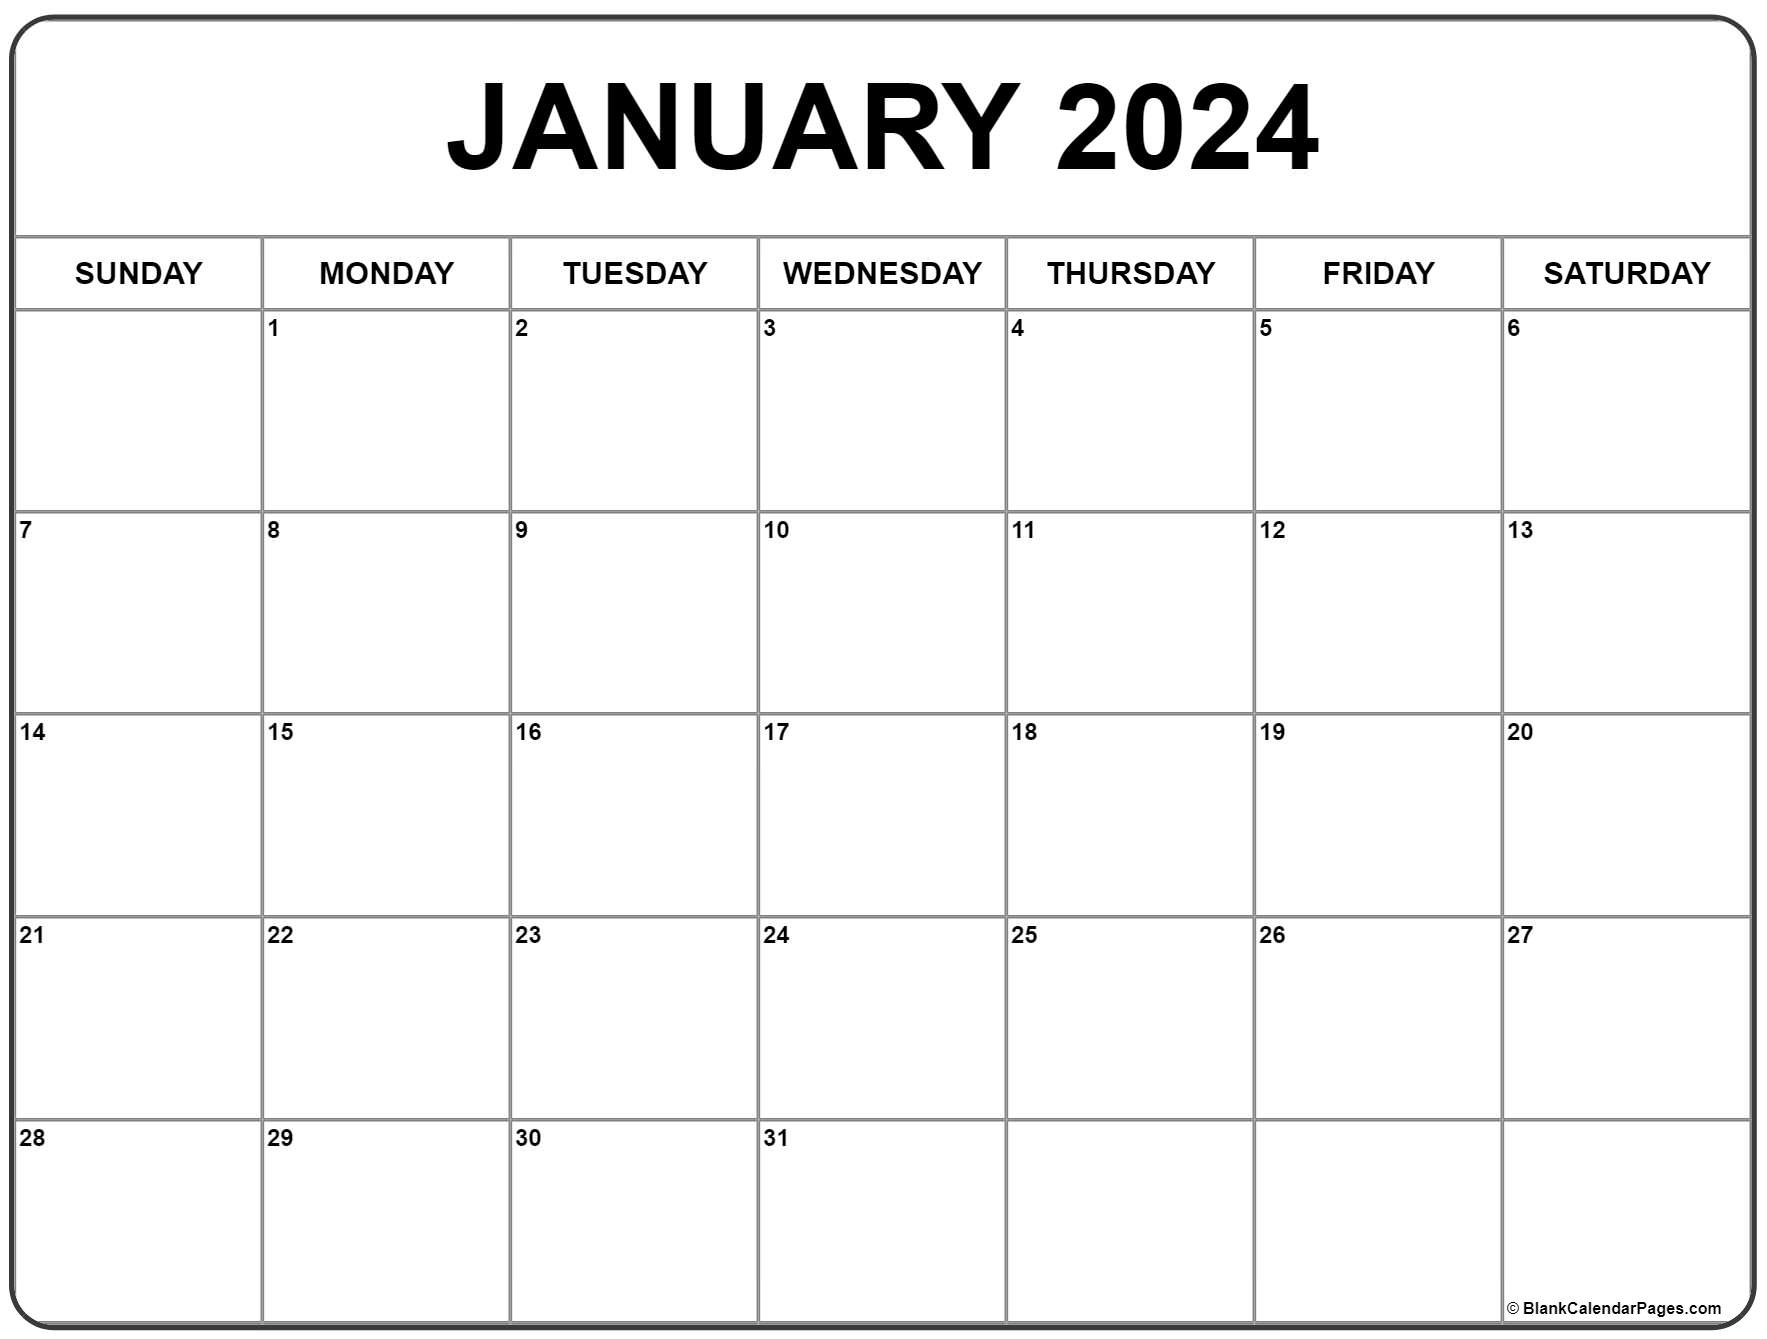 January 2024 Calendar | Free Printable Calendar for Monthly 2024 Calendar Printable